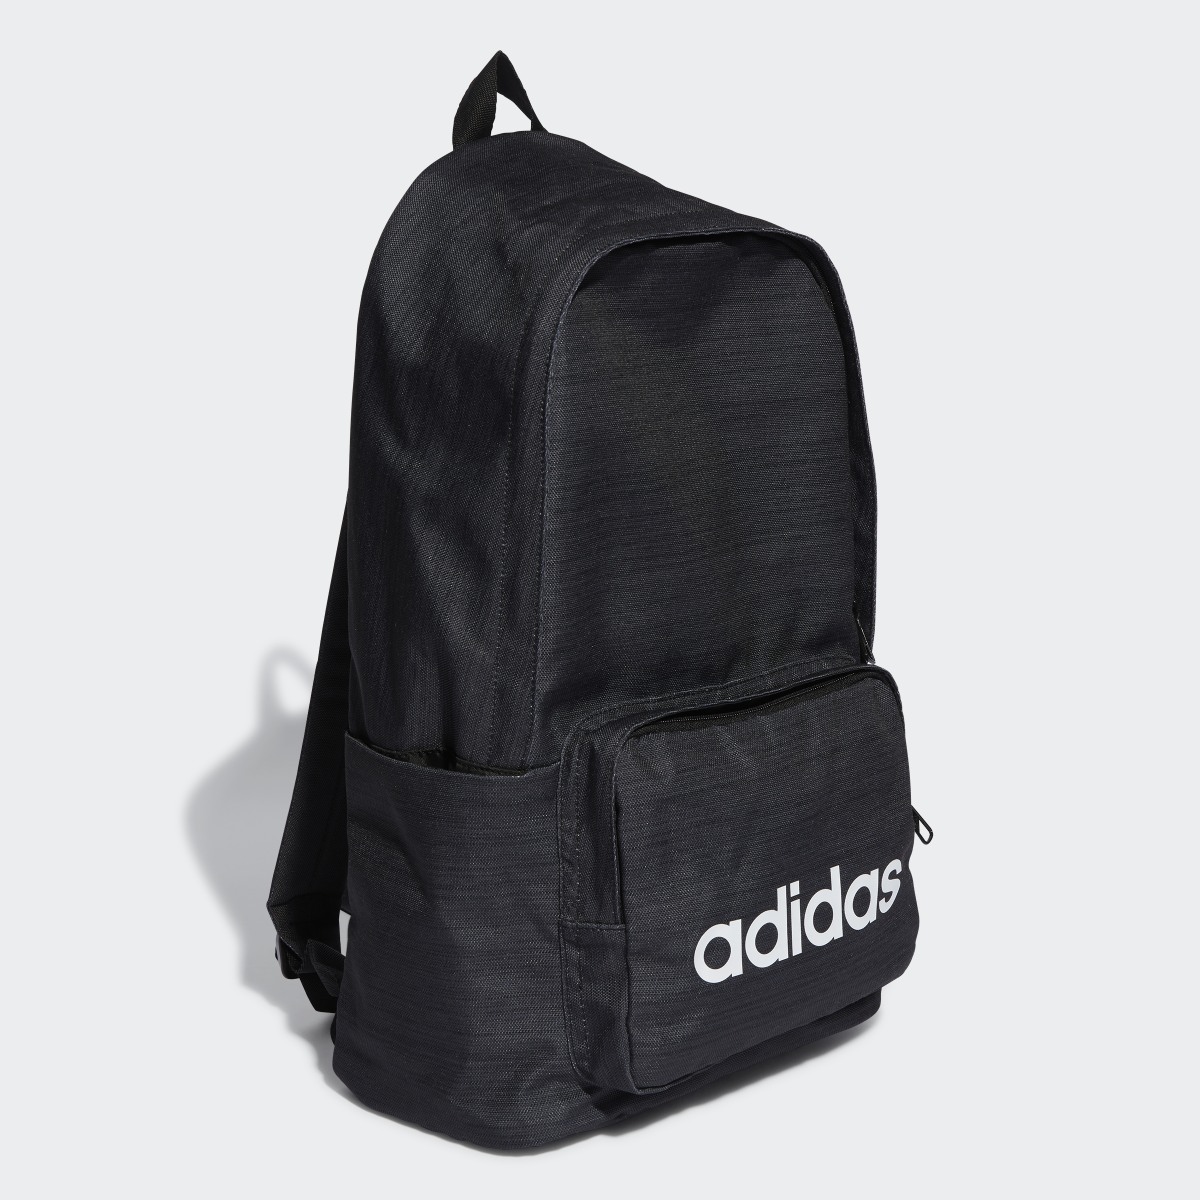 Adidas Classic Attitude Backpack. 4